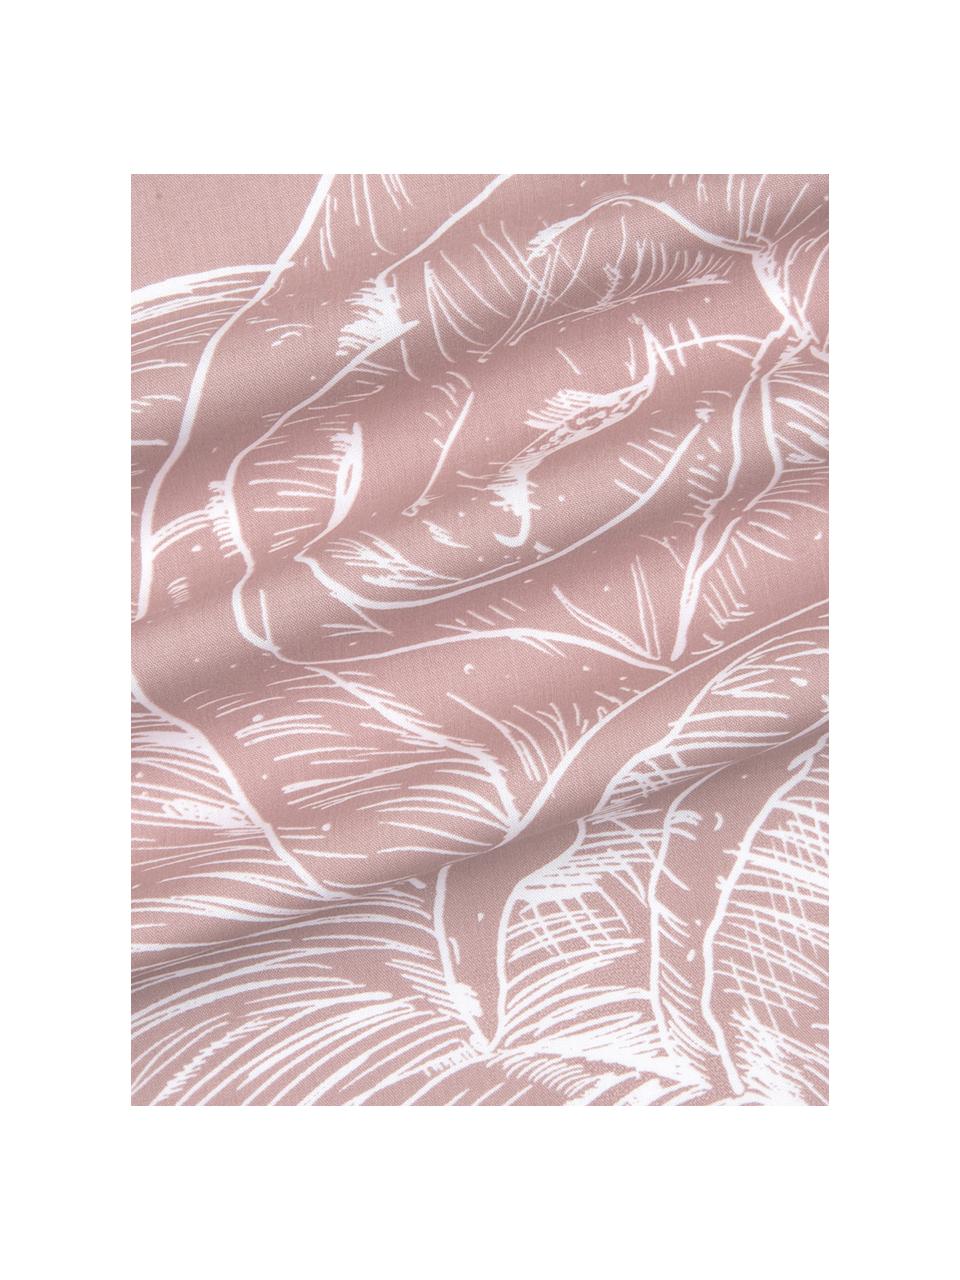 Baumwollperkal-Bettwäsche Keno mit Blumenprint, Webart: Perkal Fadendichte 180 TC, Altrosa, Weiß, 135 x 200 cm + 1 Kissen 80 x 80 cm